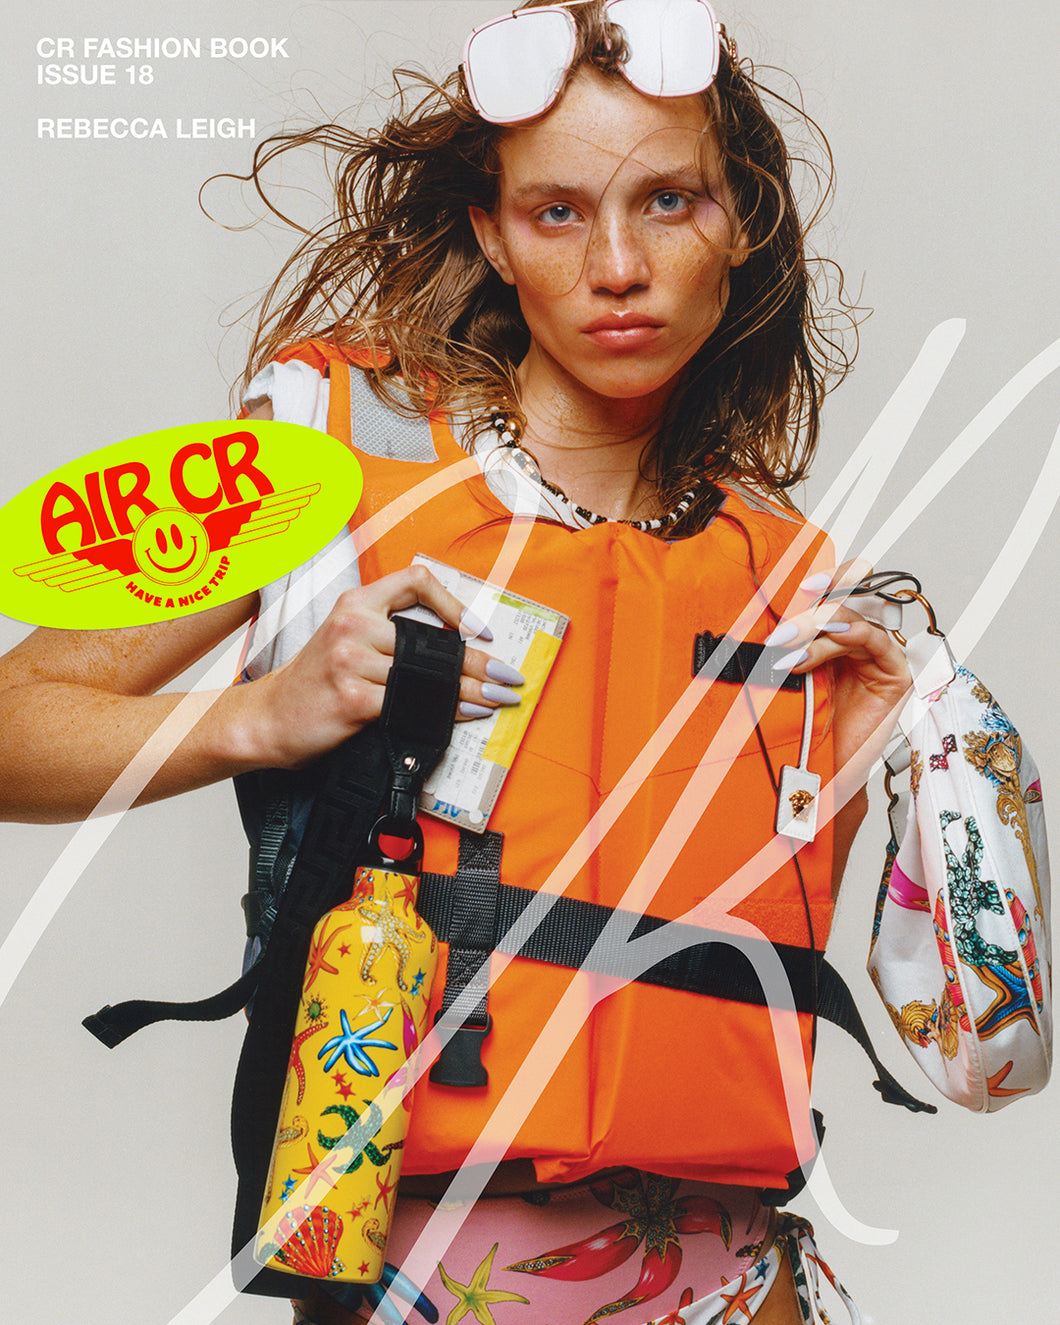 CR Fashion Book - Issue 18